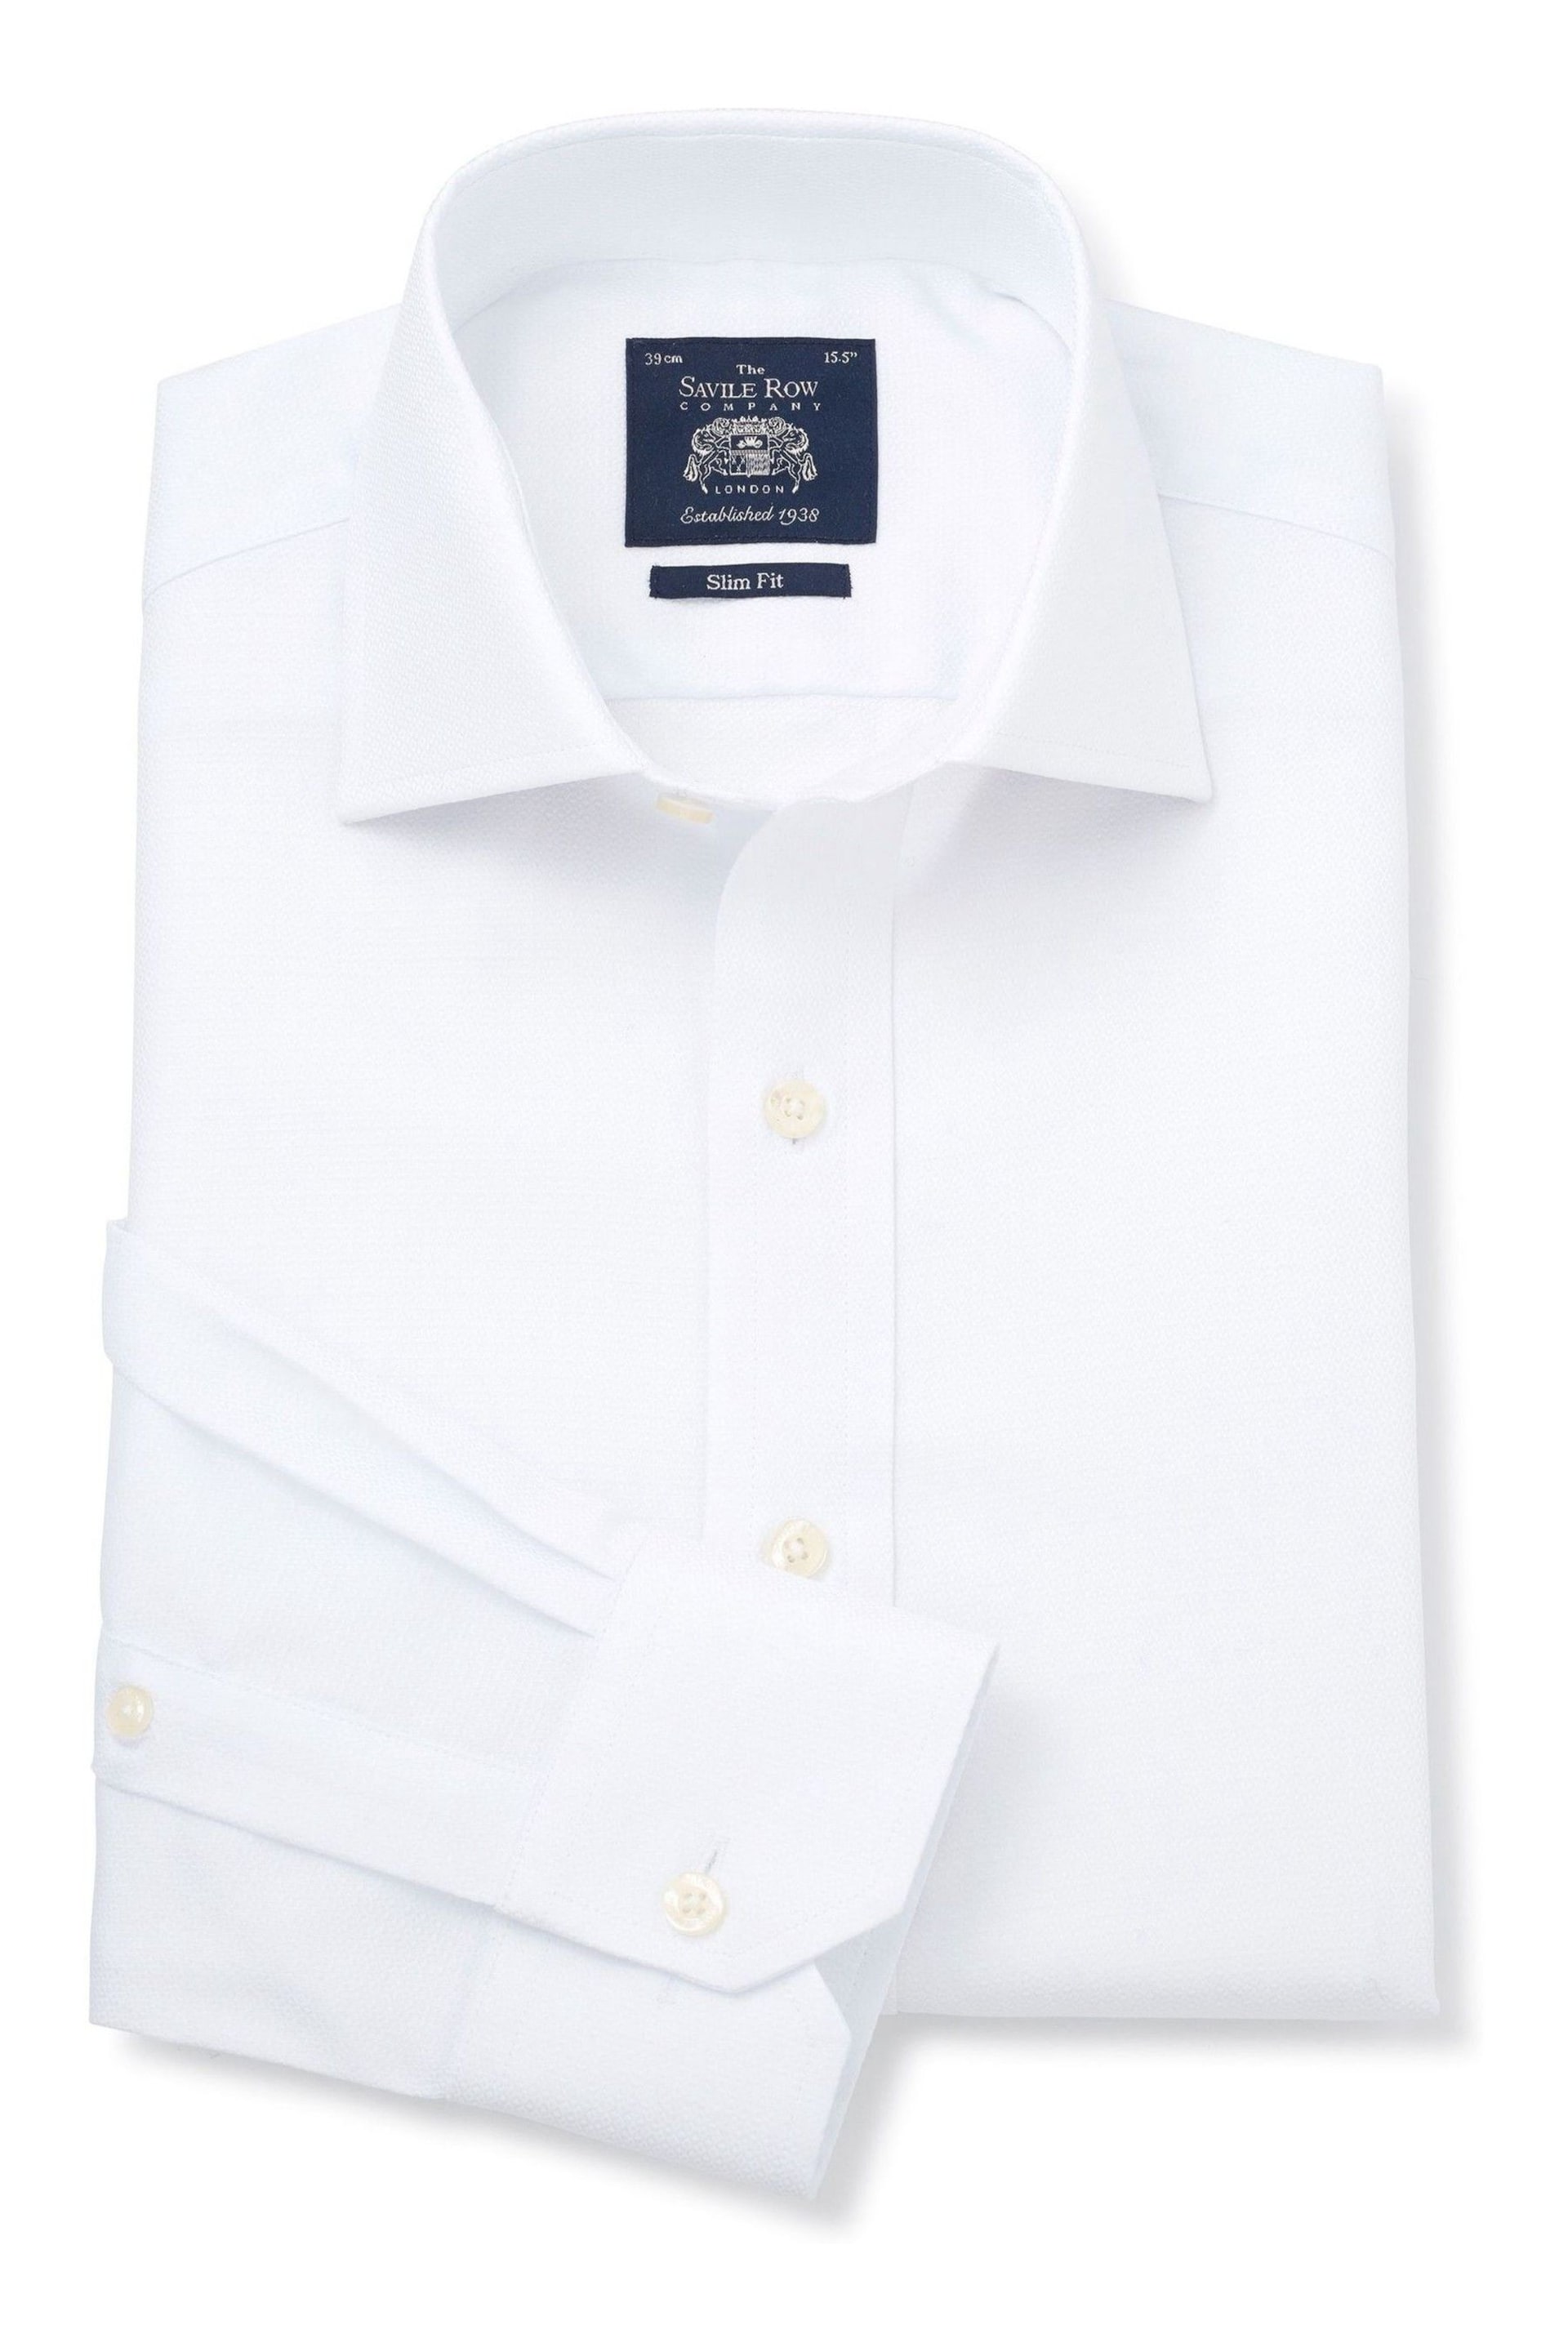 Savile Row Company Textured Dobby Slim Single Cuff White Shirt - Image 2 of 4